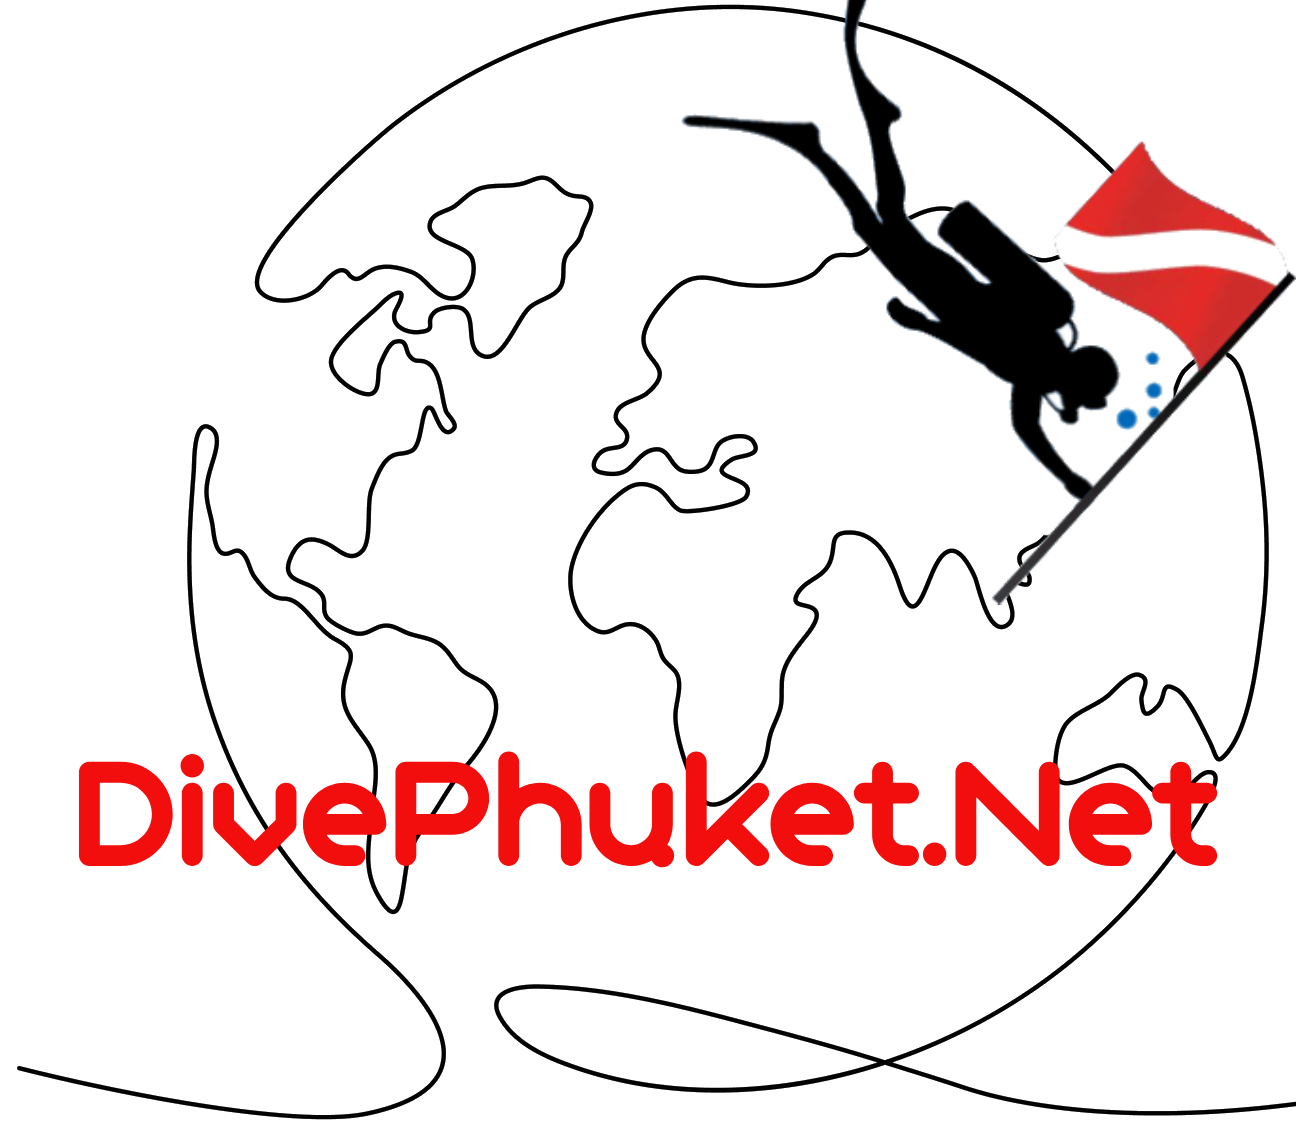 Dive Phuket